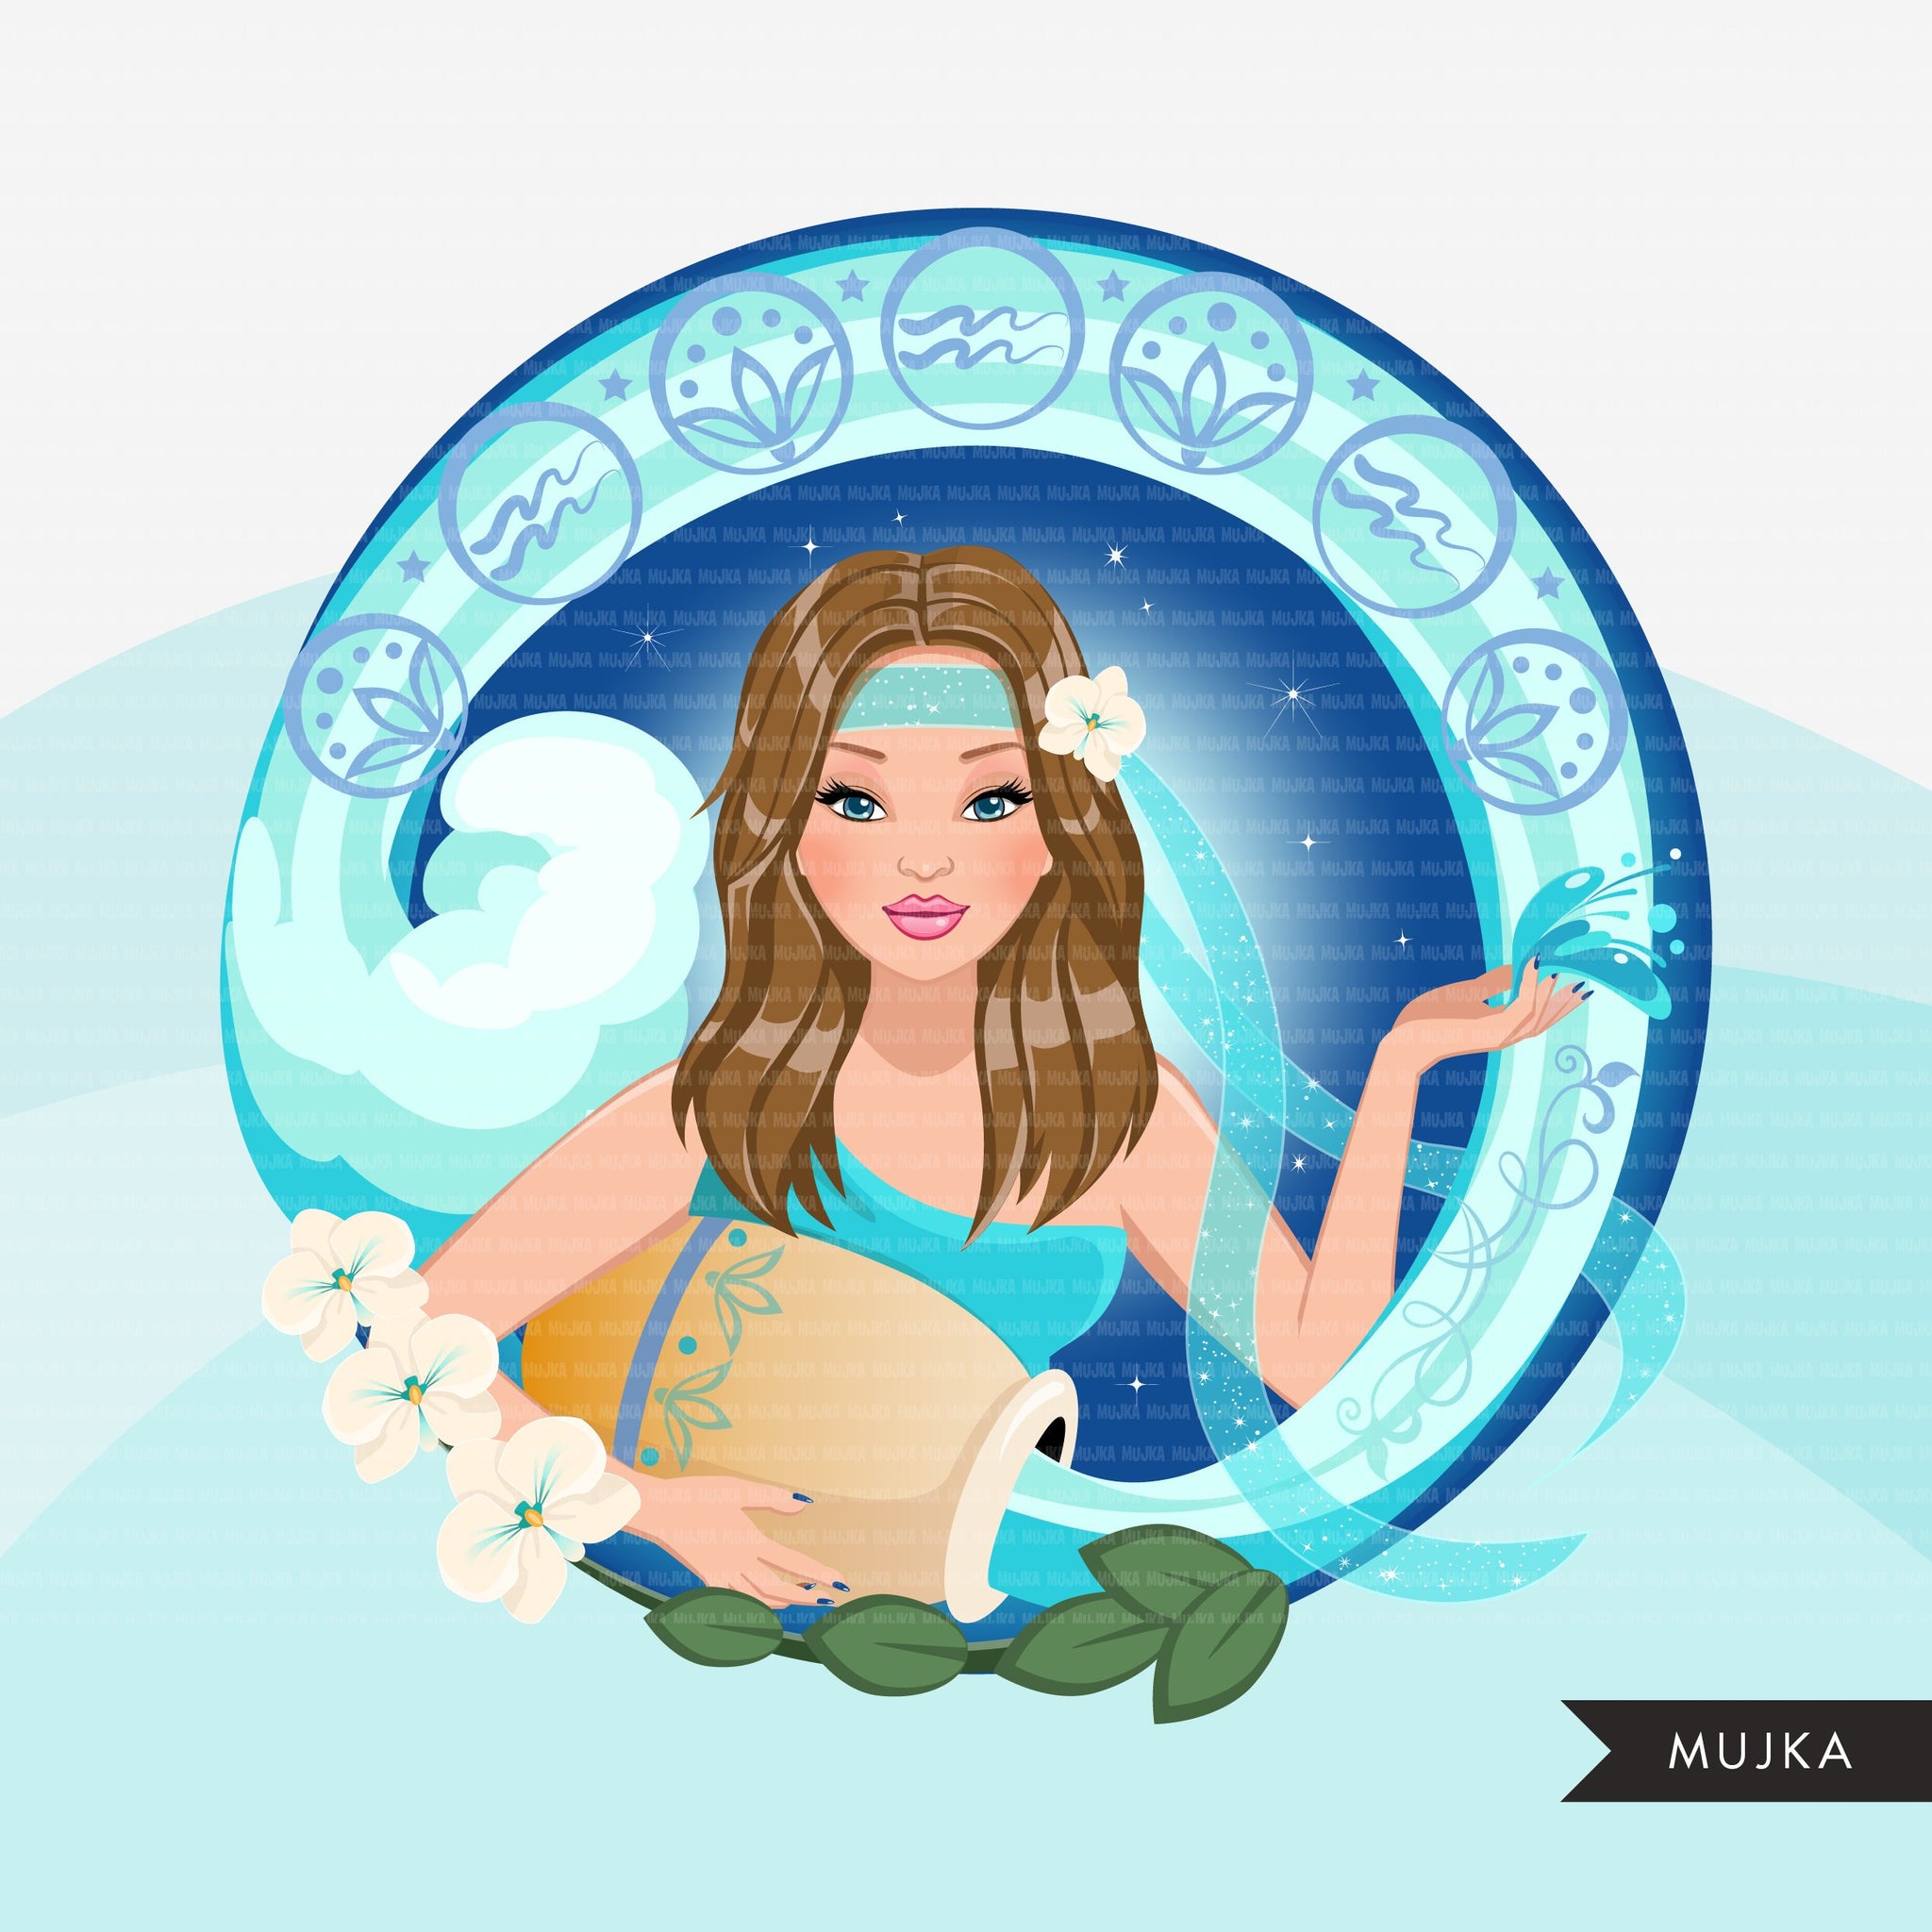 Zodiac Aquarius Clipart, Png digital download, Sublimation Graphics for Cricut & Cameo, Caucasian Short Hair Woman Horoscope sign designs